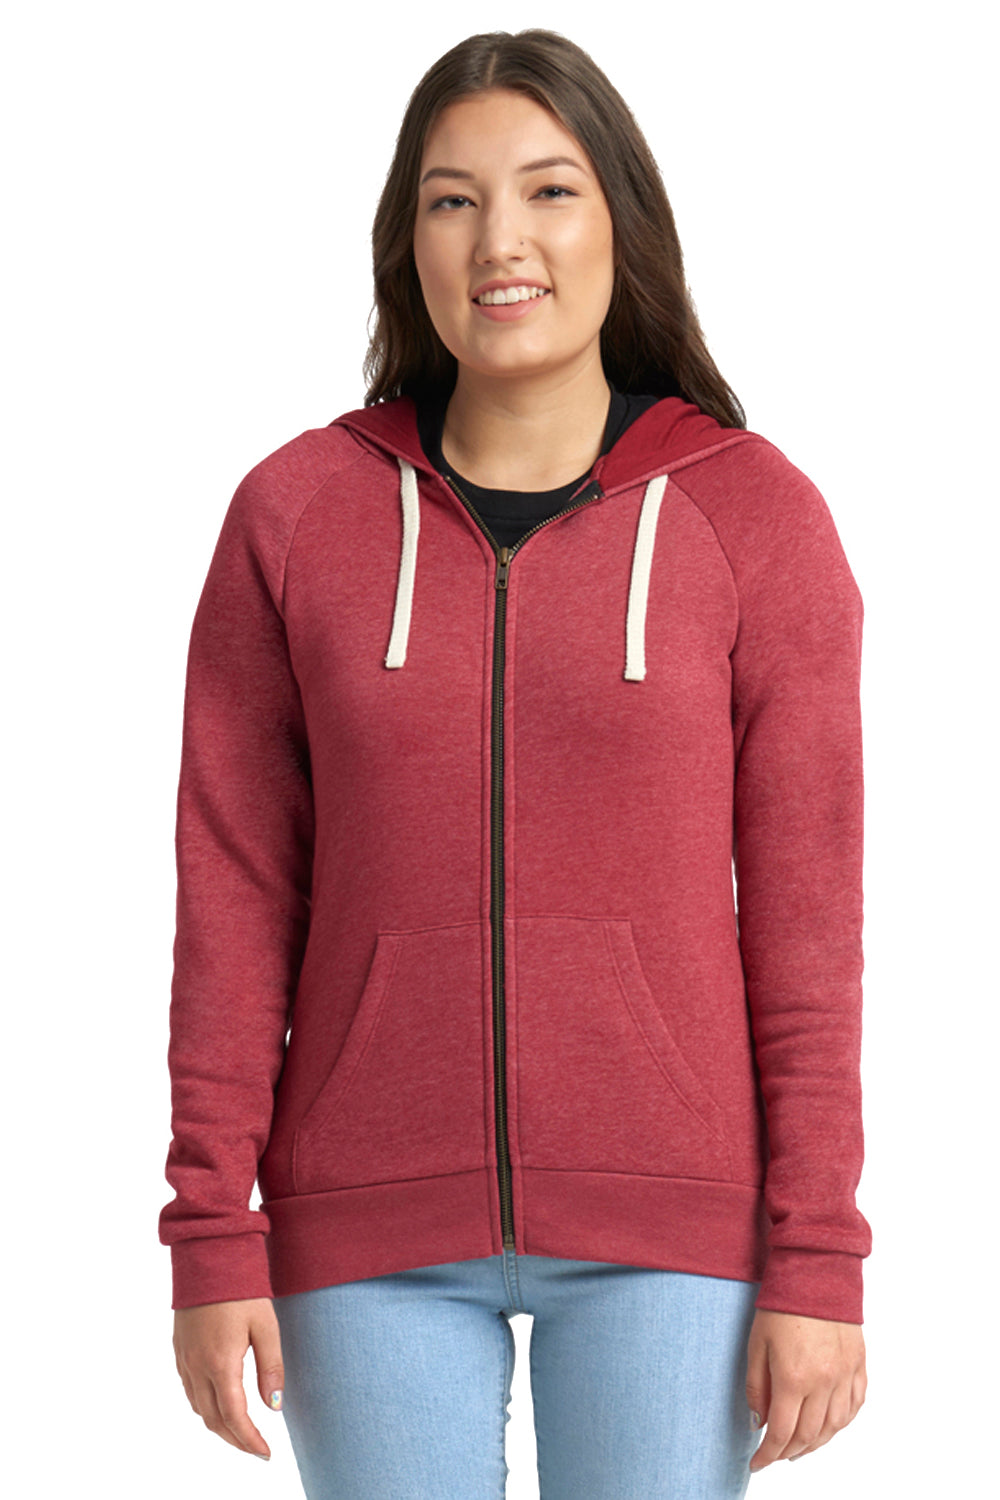 Next Level 9603 Womens Heather Cardinal Red PCH Fleece Full Zip Hooded  Sweatshirt Hoodie — BigTopShirtShop.com